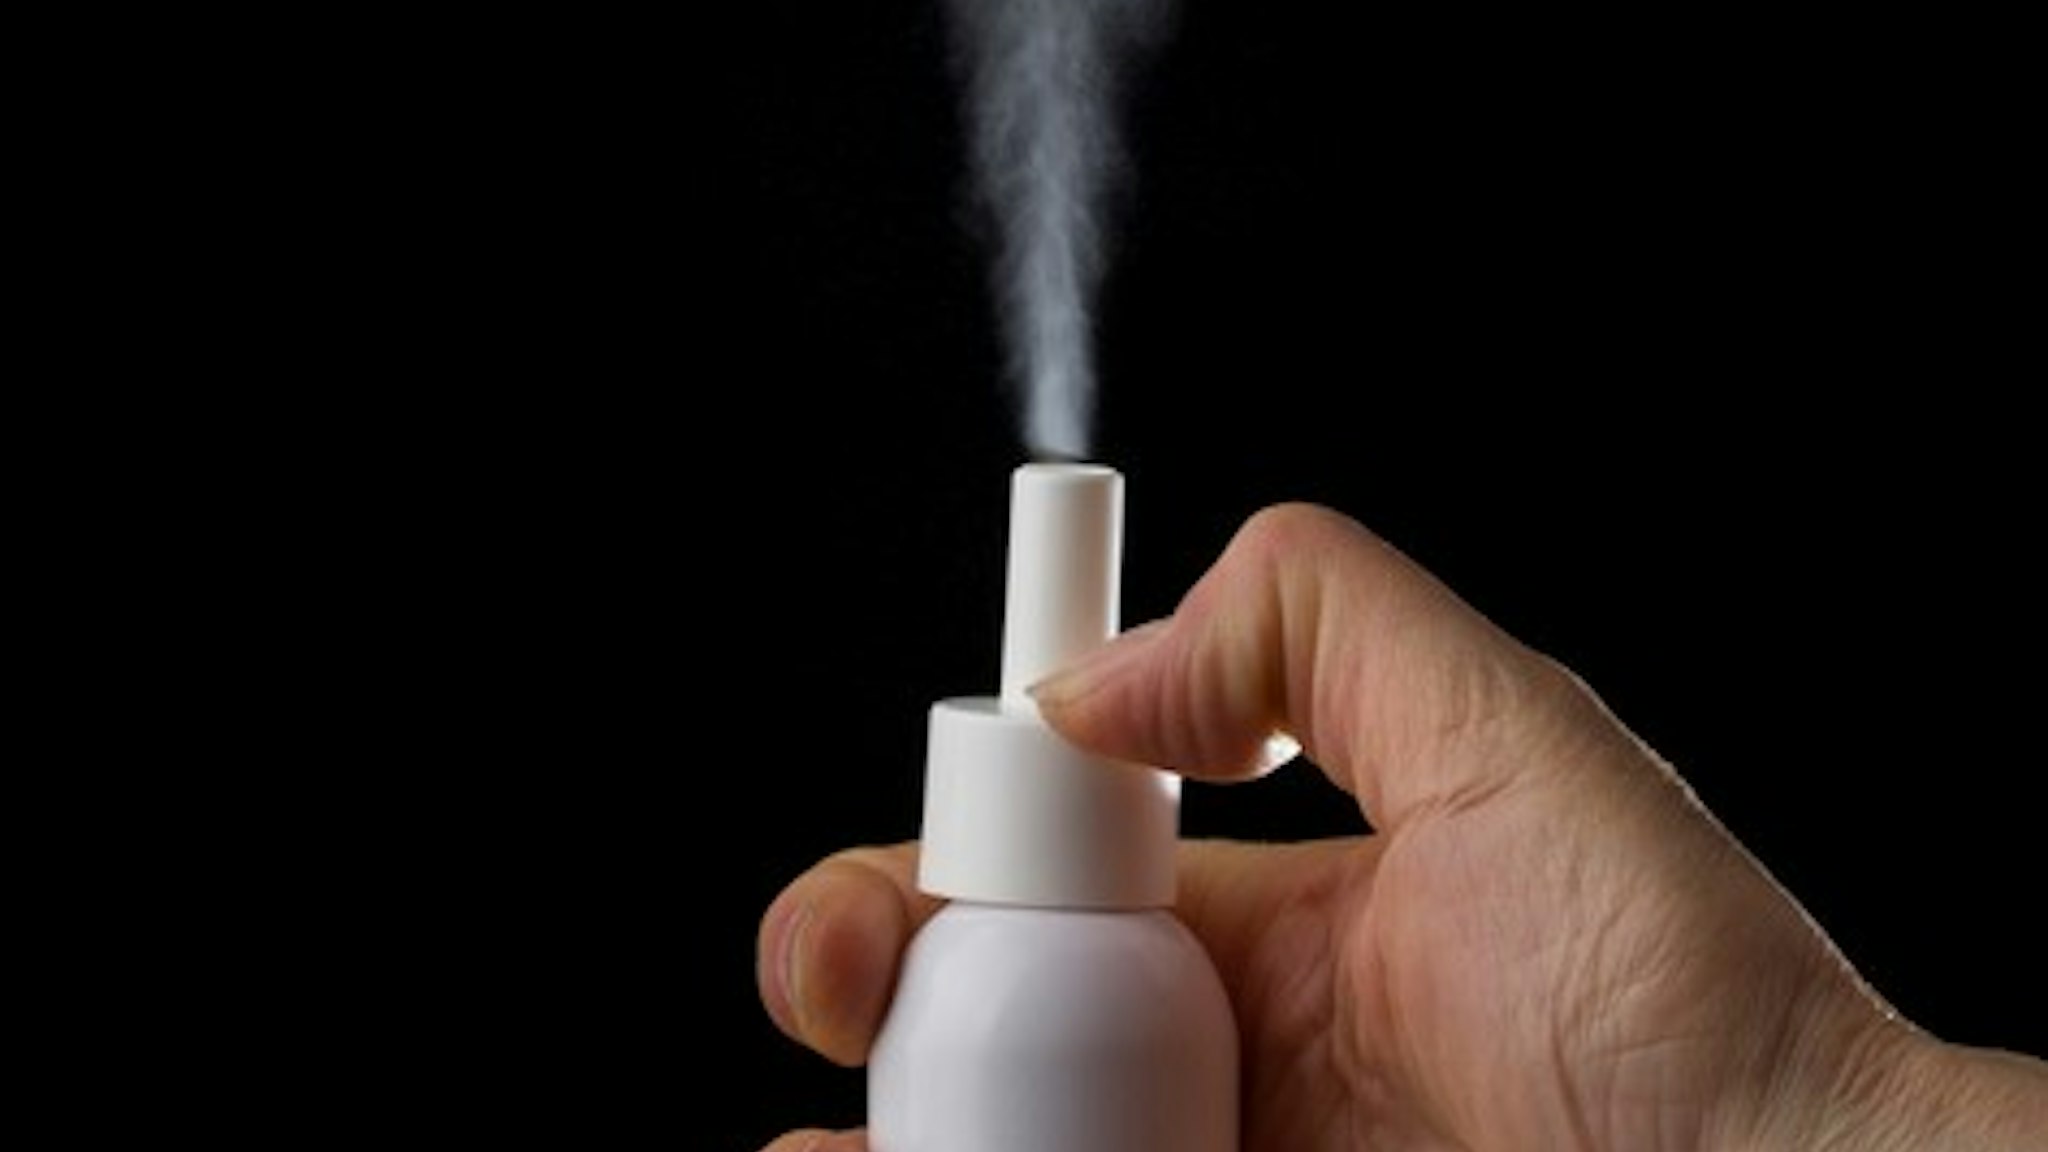 White container of spray bottle on black background. Hand holds medical inhaler